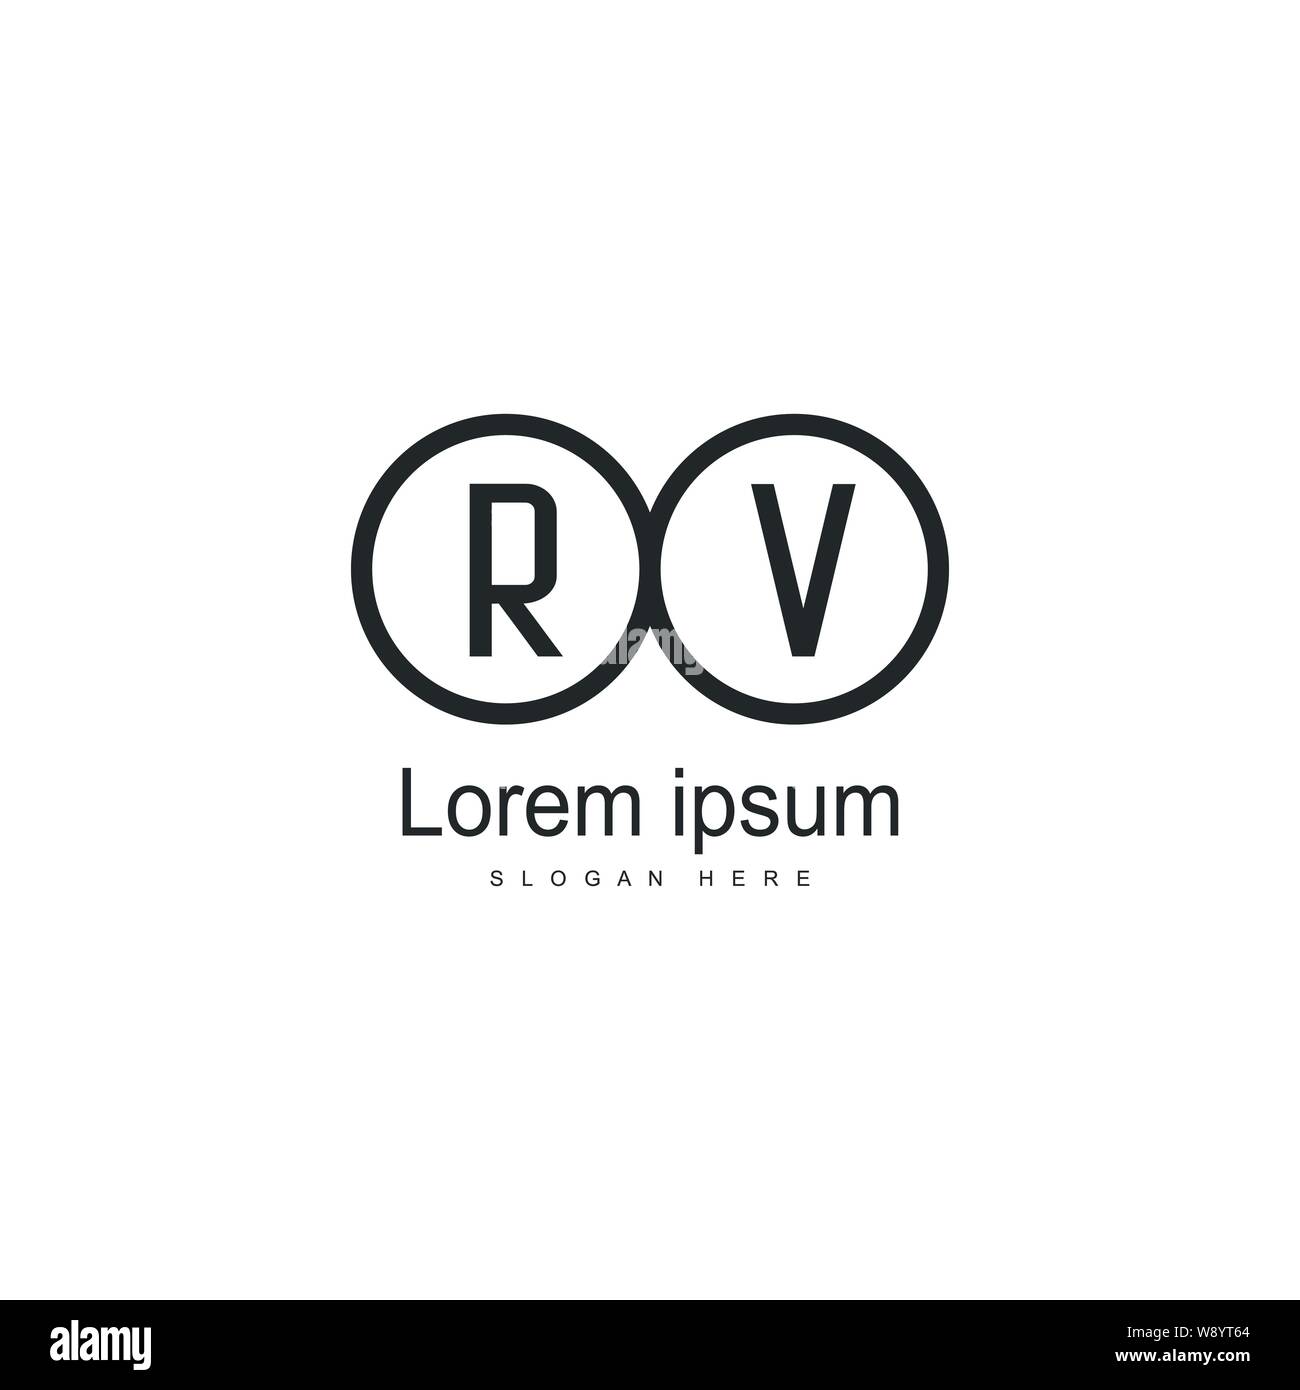 Premium Vector | Vr logo design template vector graphic branding element